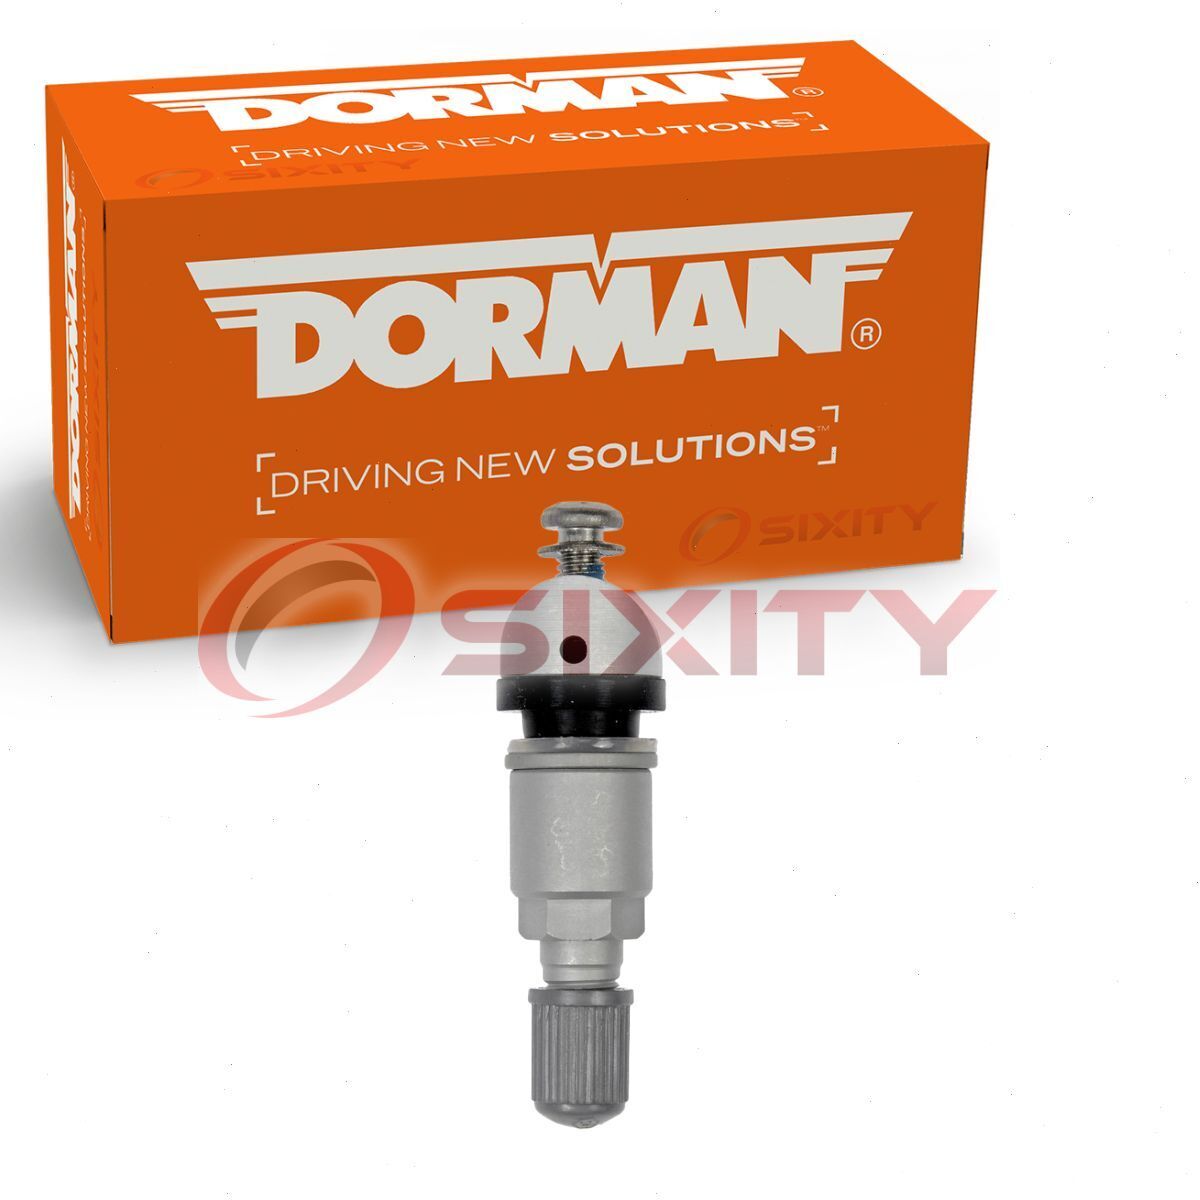 Dorman TPMS Valve Kit for 2000 BMW 323Ci Tire Pressure Monitoring System  ky